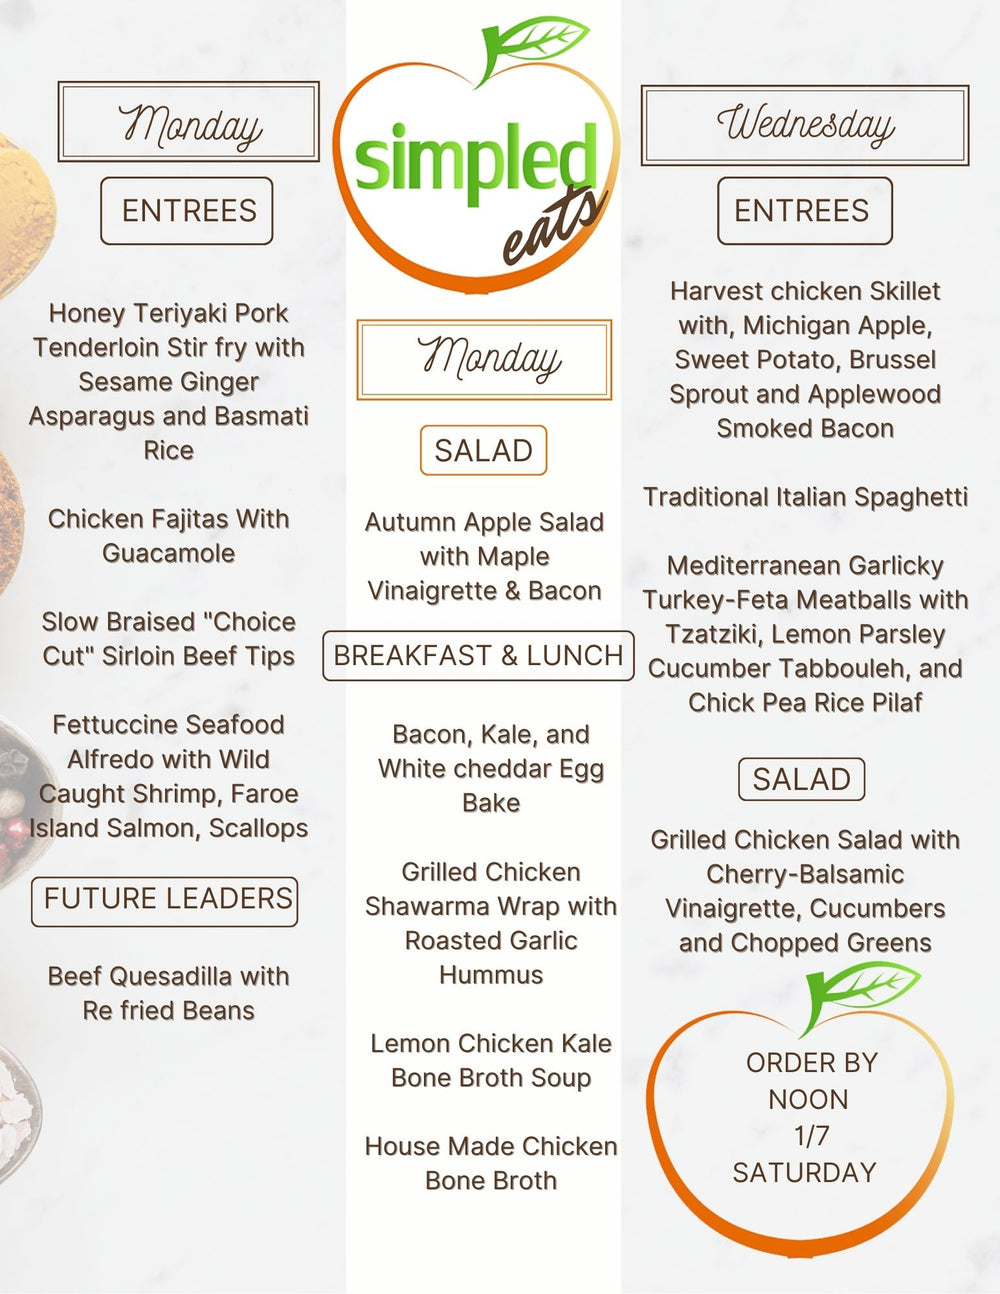 Simpled Eats LLC: Healthy Meals, Delivered